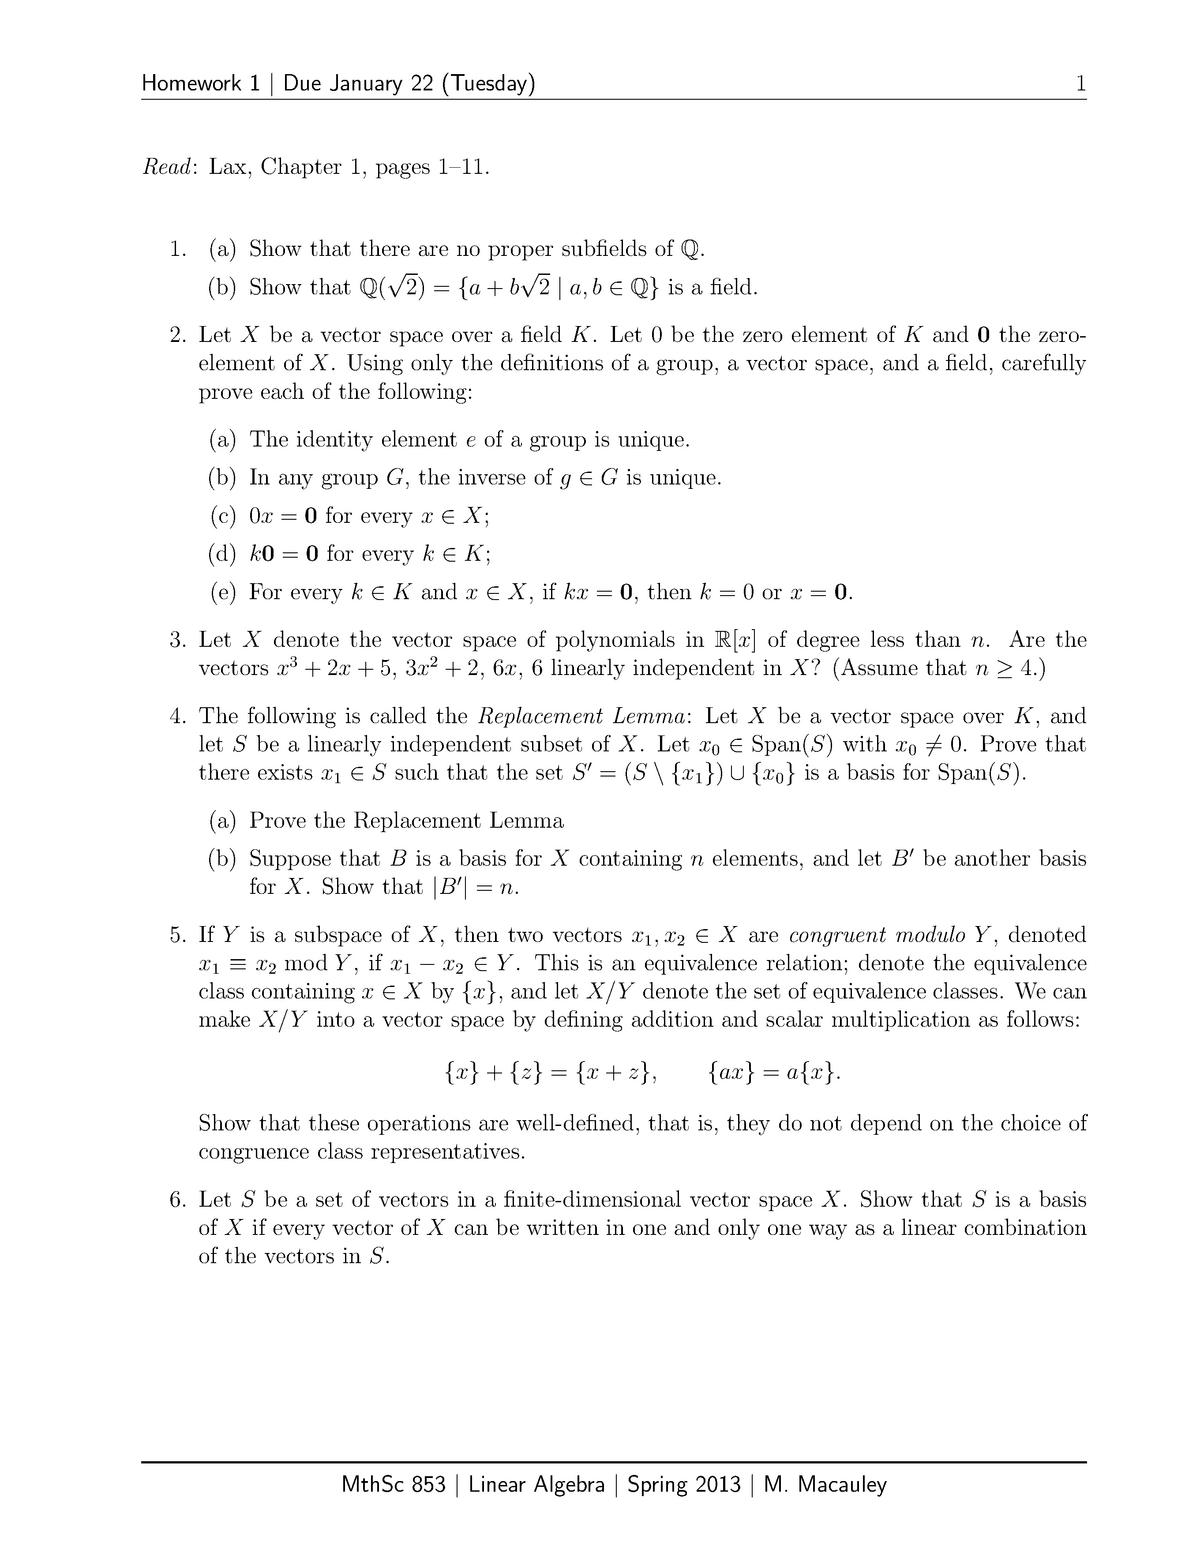 22 Januari Homework Mthsc853 Mathemetical Science Studocu